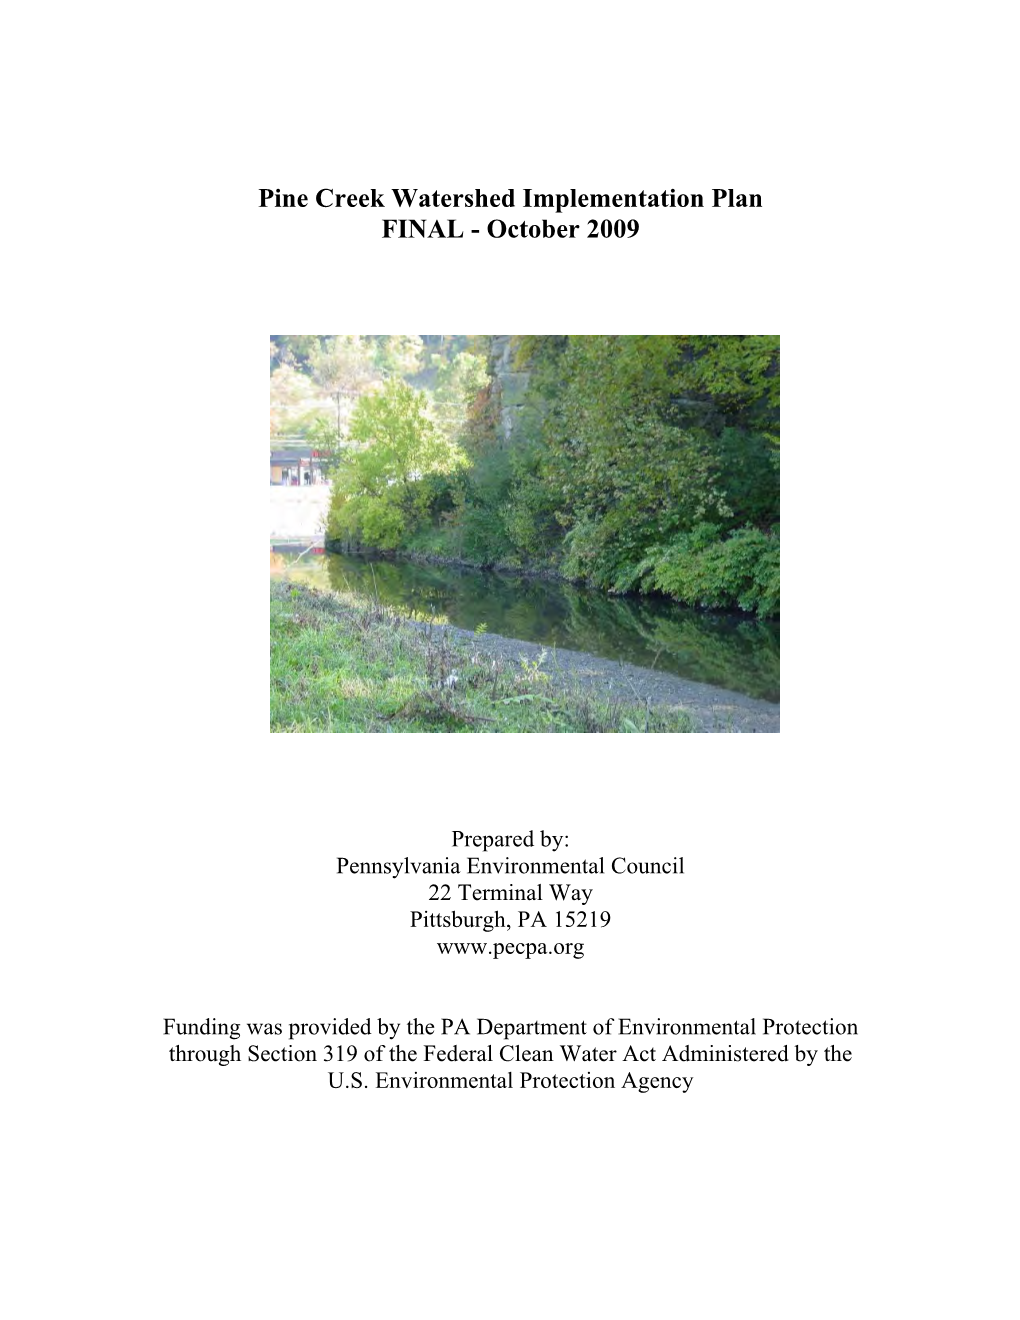 Pine Creek Watershed Implementation Plan FINAL - October 2009